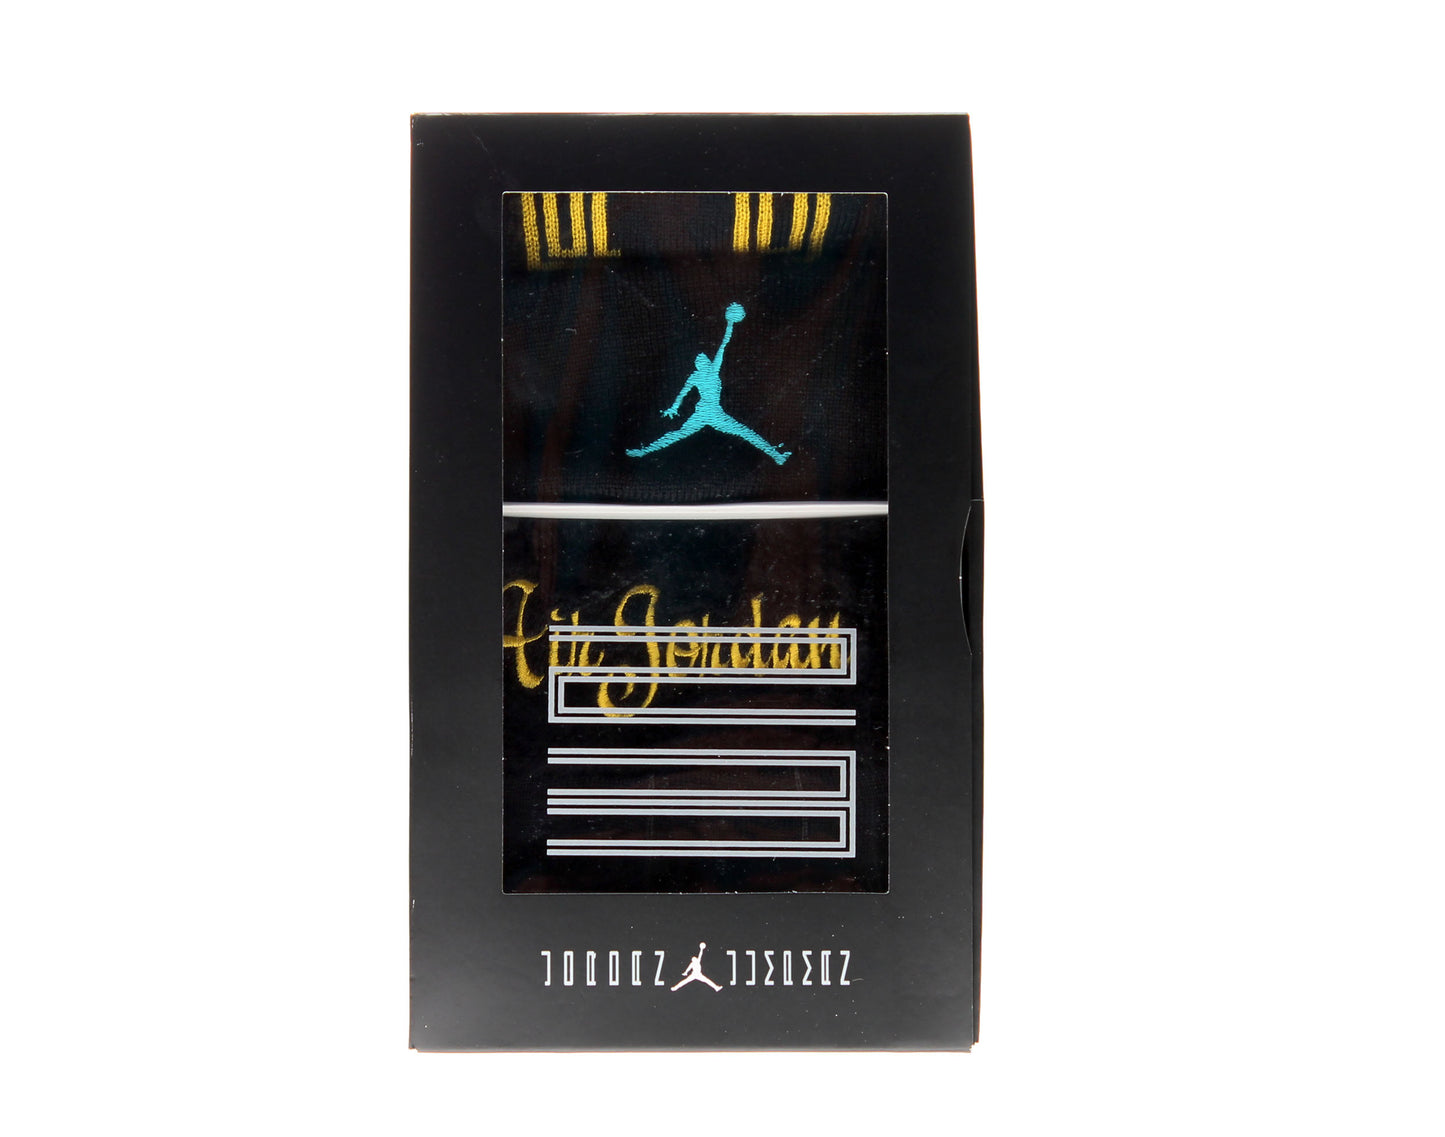 Nike Air Jordan 11 Retro Holiday Gamma Blue/Black Gift Set 507949-016